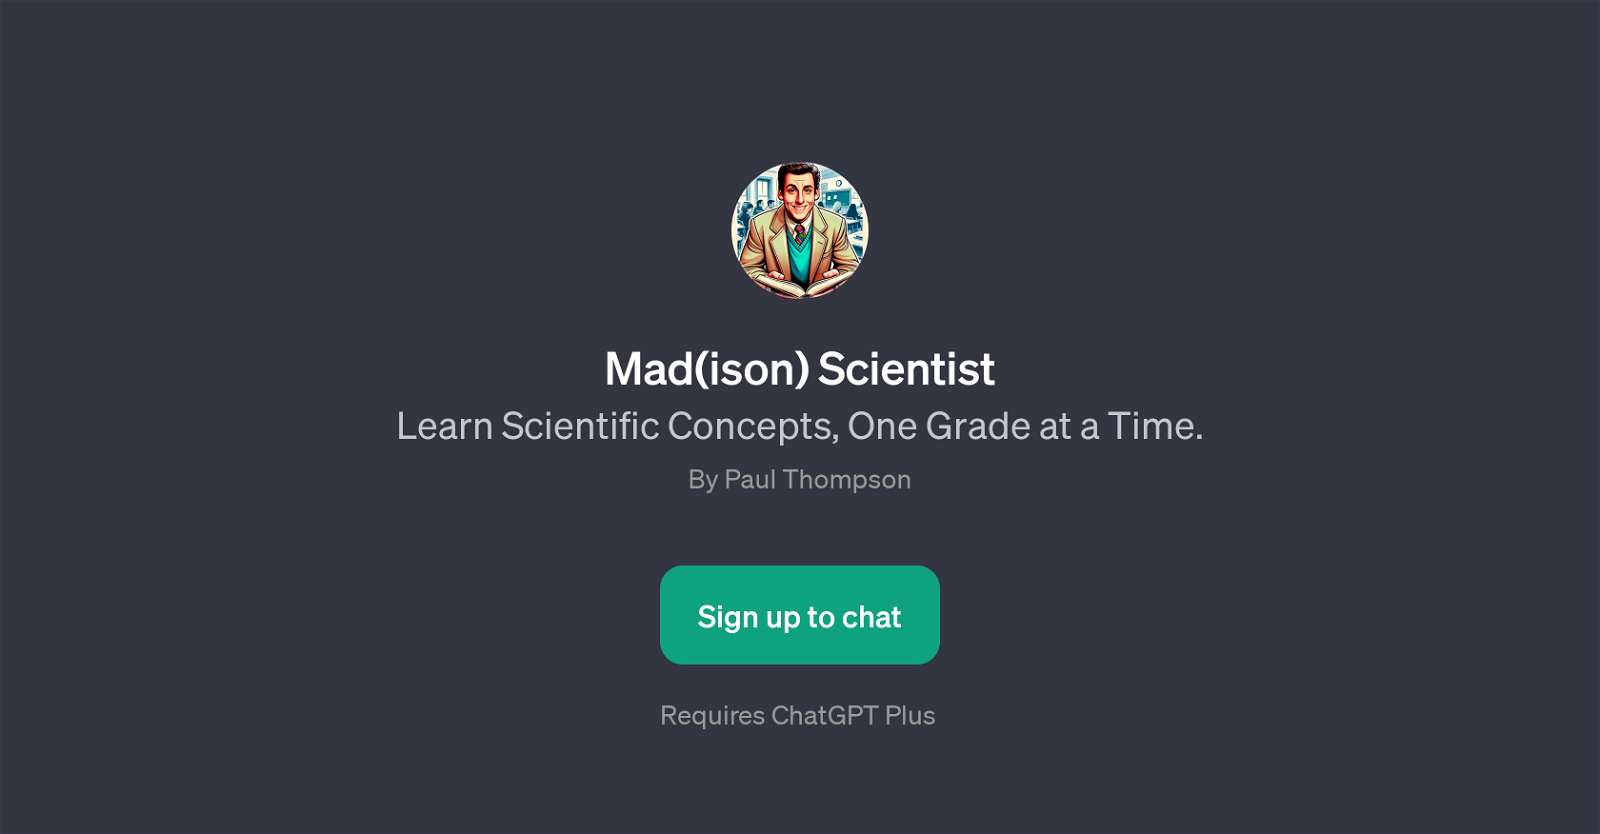 Mad(ison) Scientist website